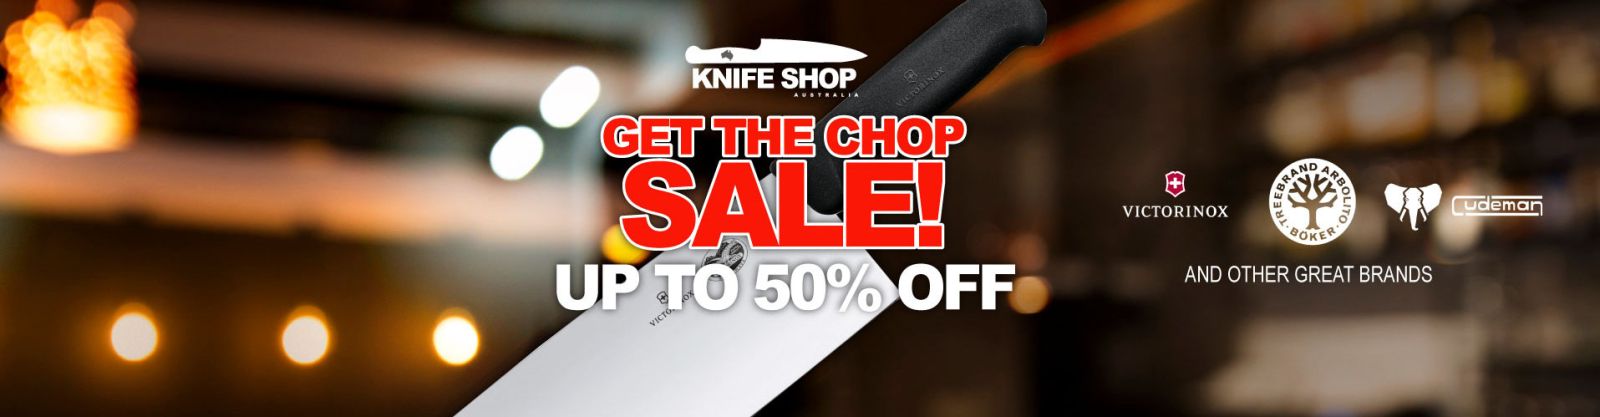 Get The Chop Sale